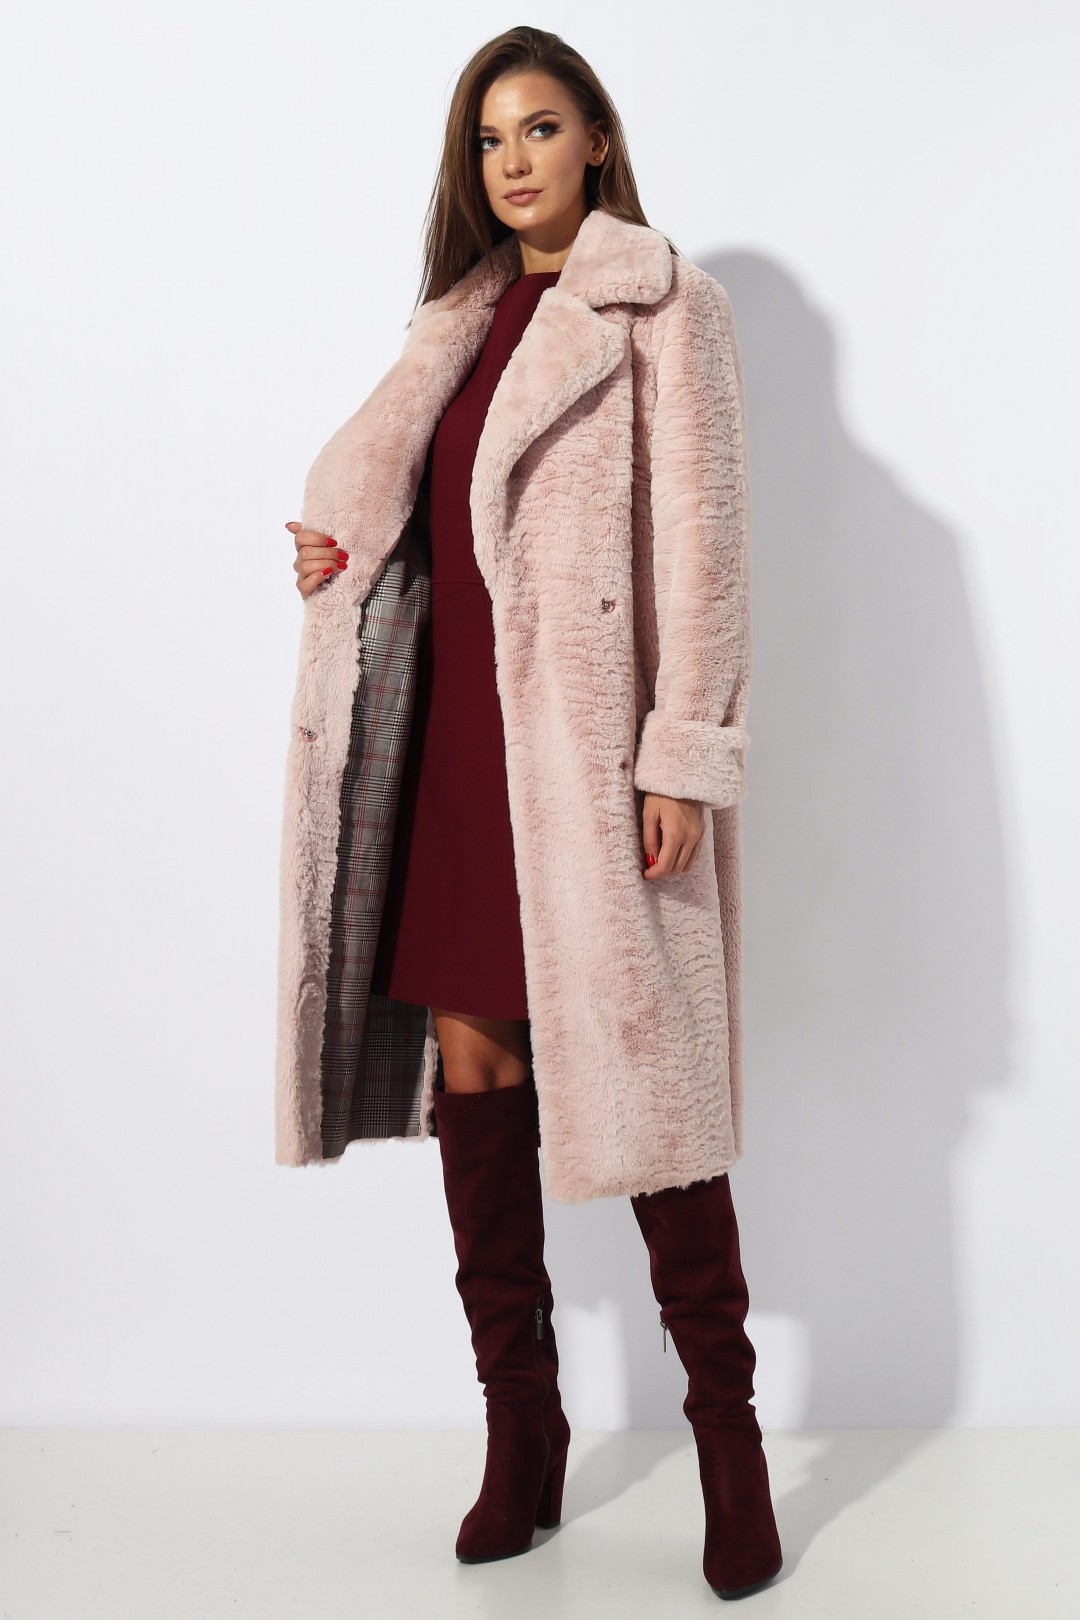   Пальто МиА-Мода  1194-1 розовый